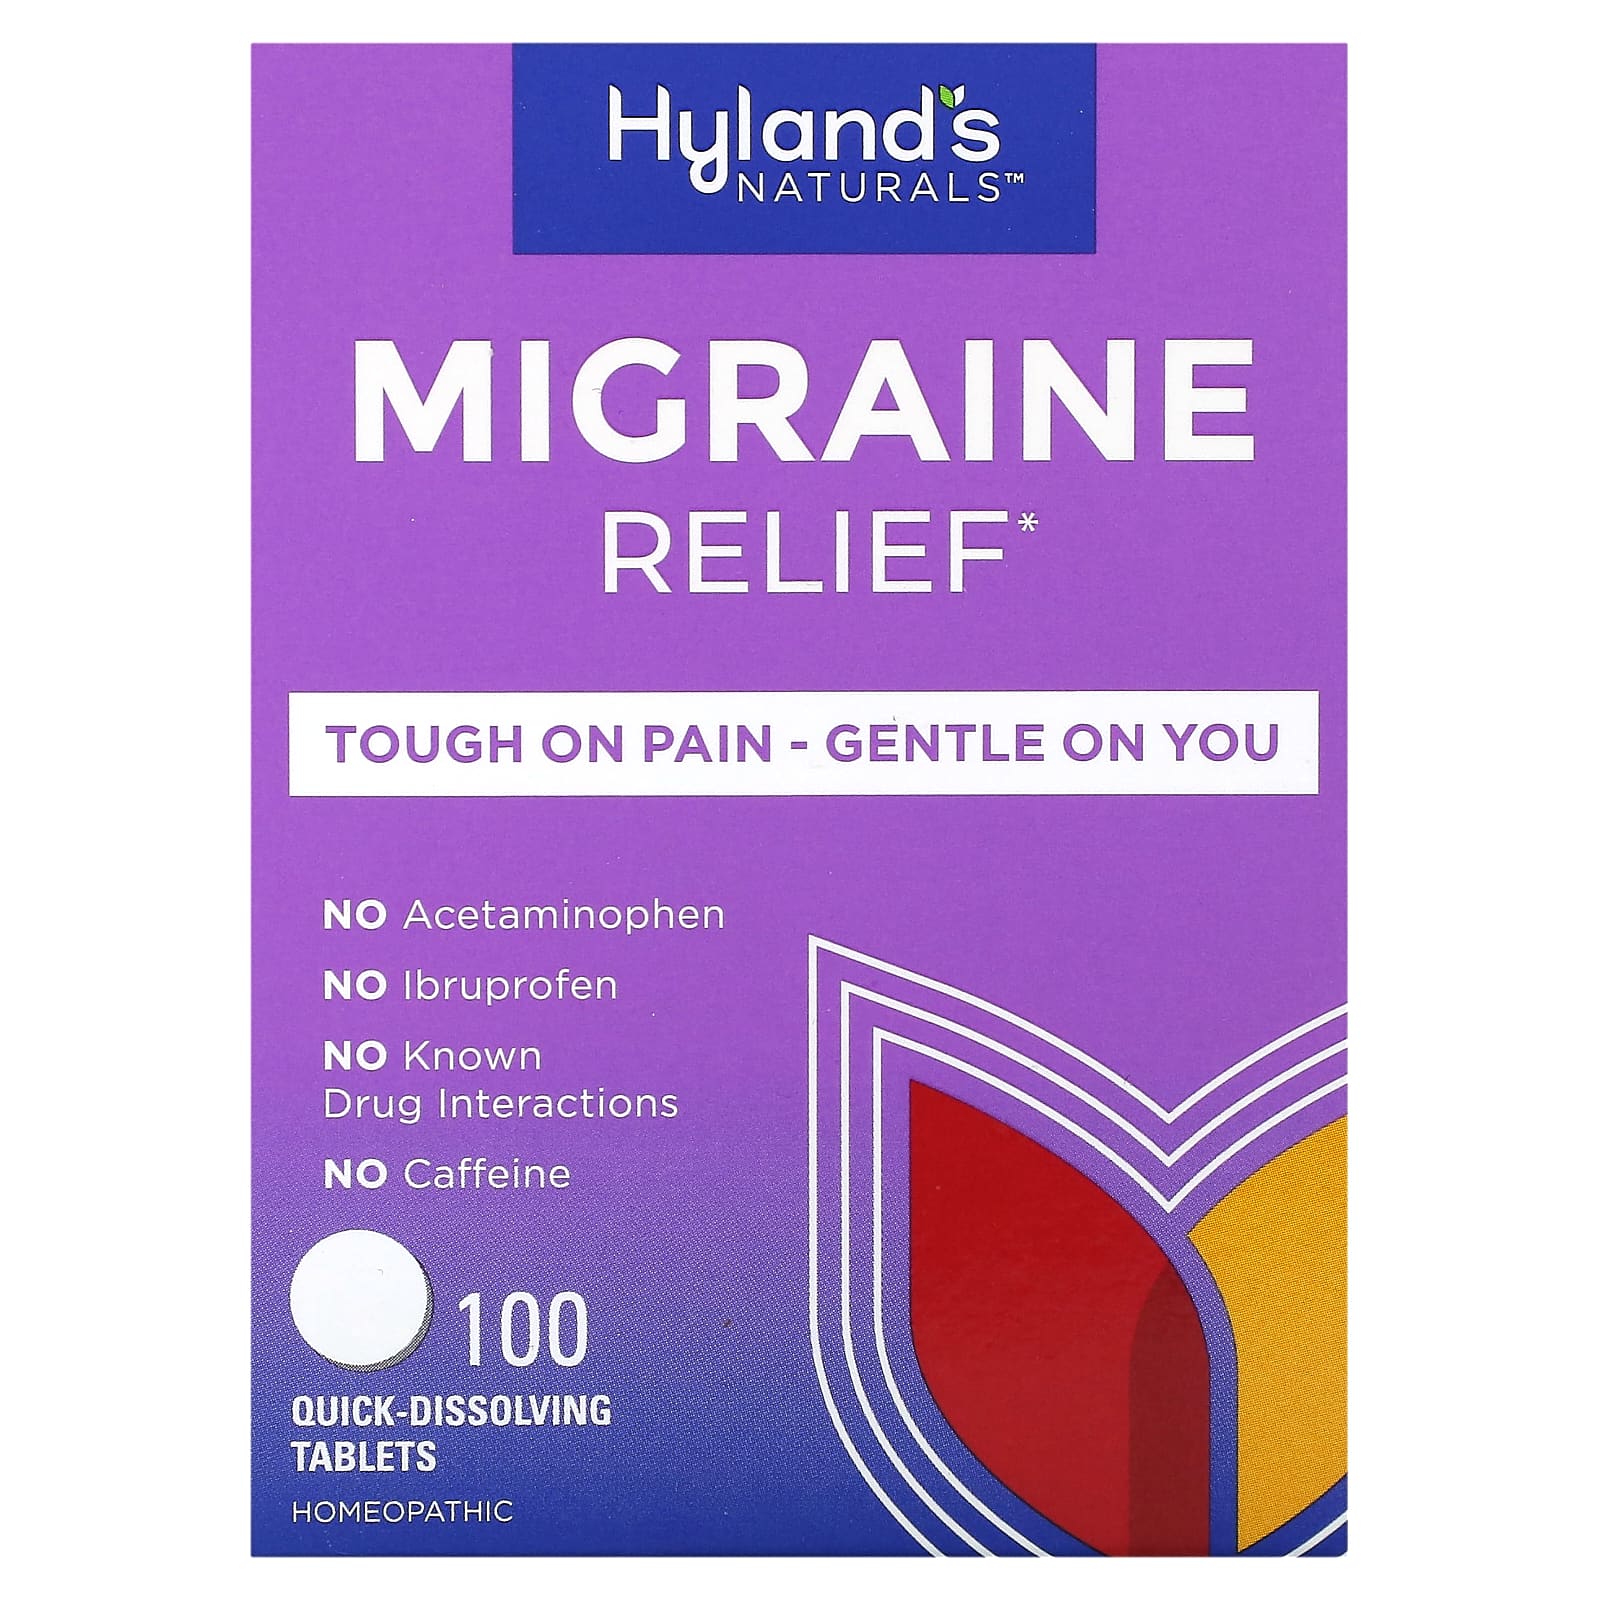 Hyland's Naturals Migraine Relief 100 tablets